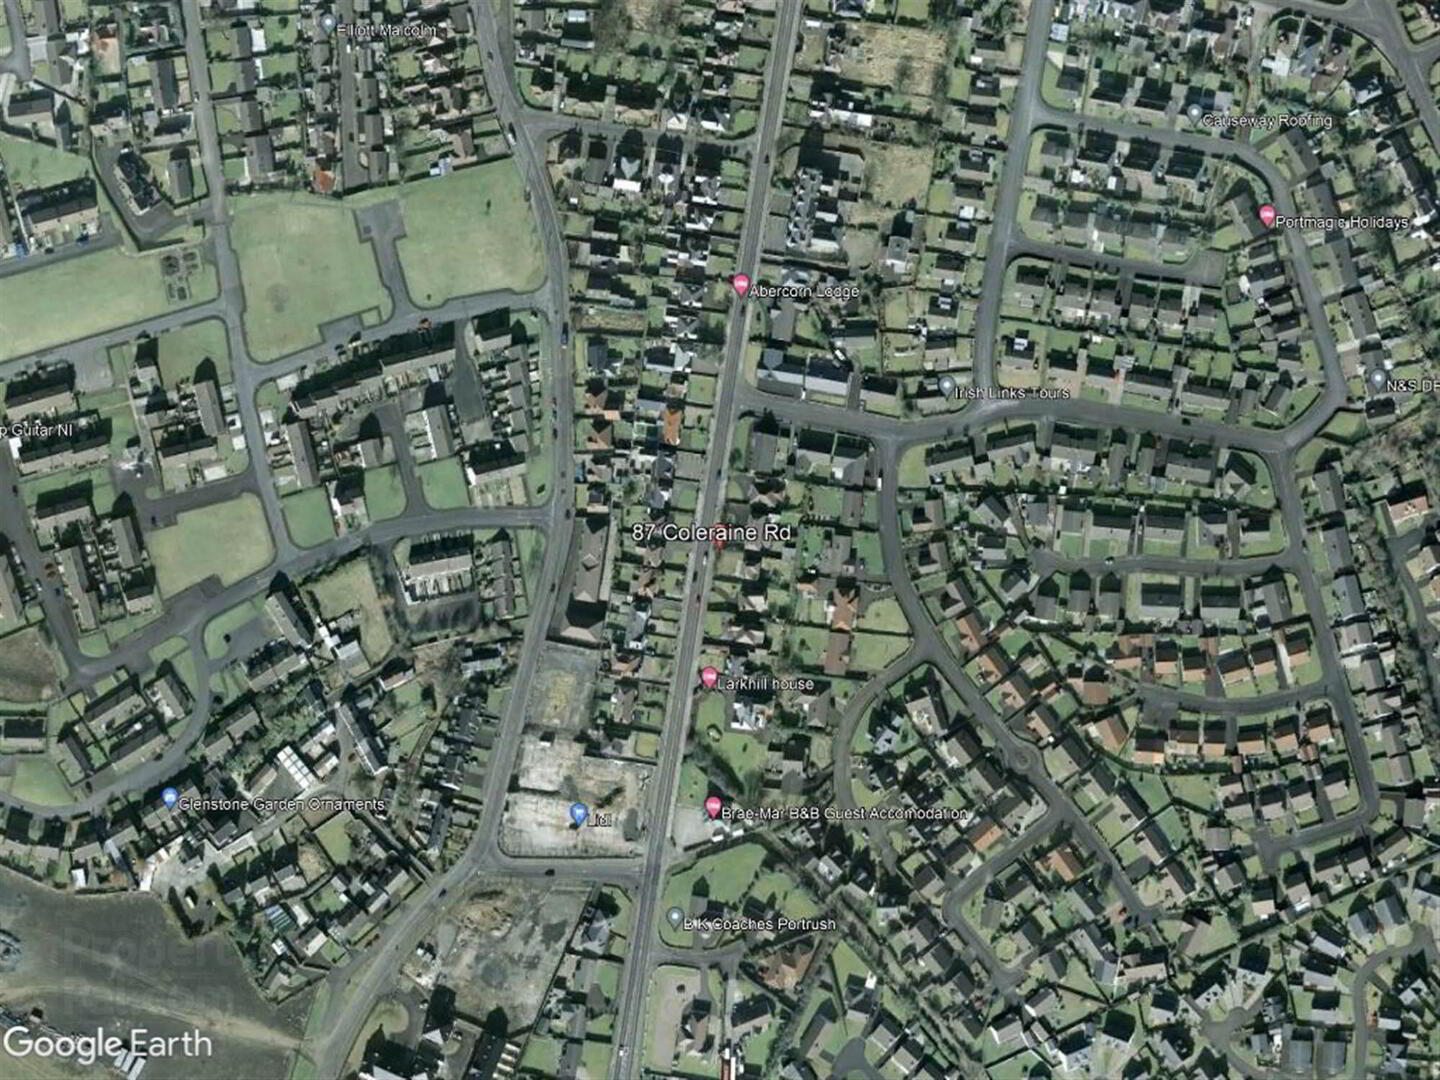 Semi-Detached Dwellings At, 87 Coleraine Road ( Site 1)